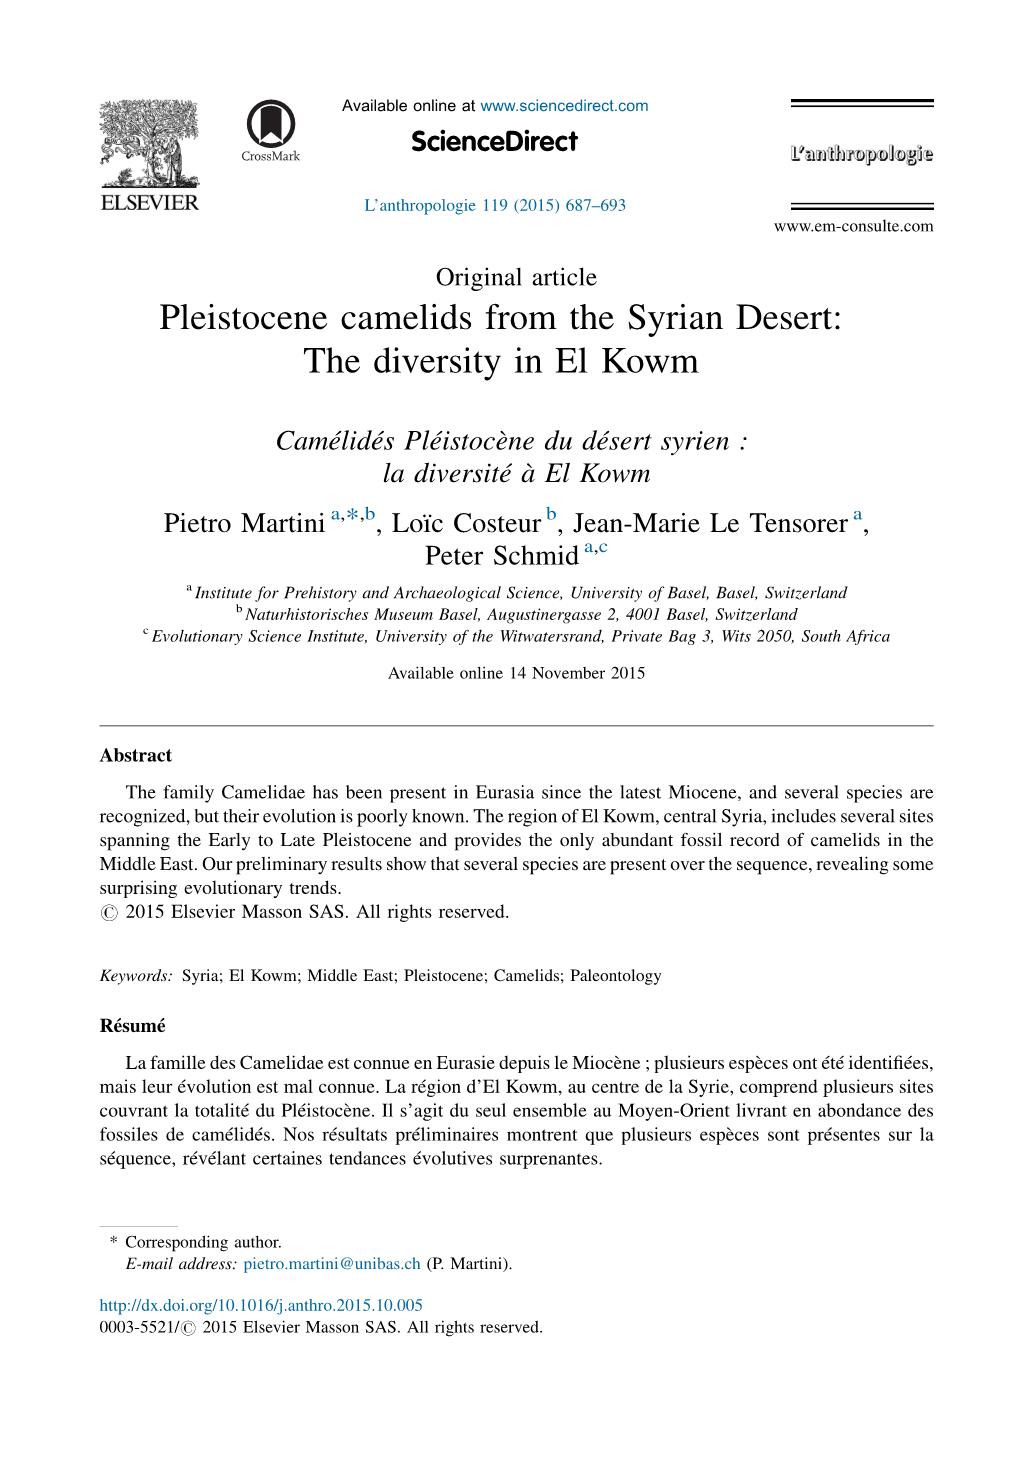 Pleistocene Camelids from the Syrian Desert: the Diversity in El Kowm